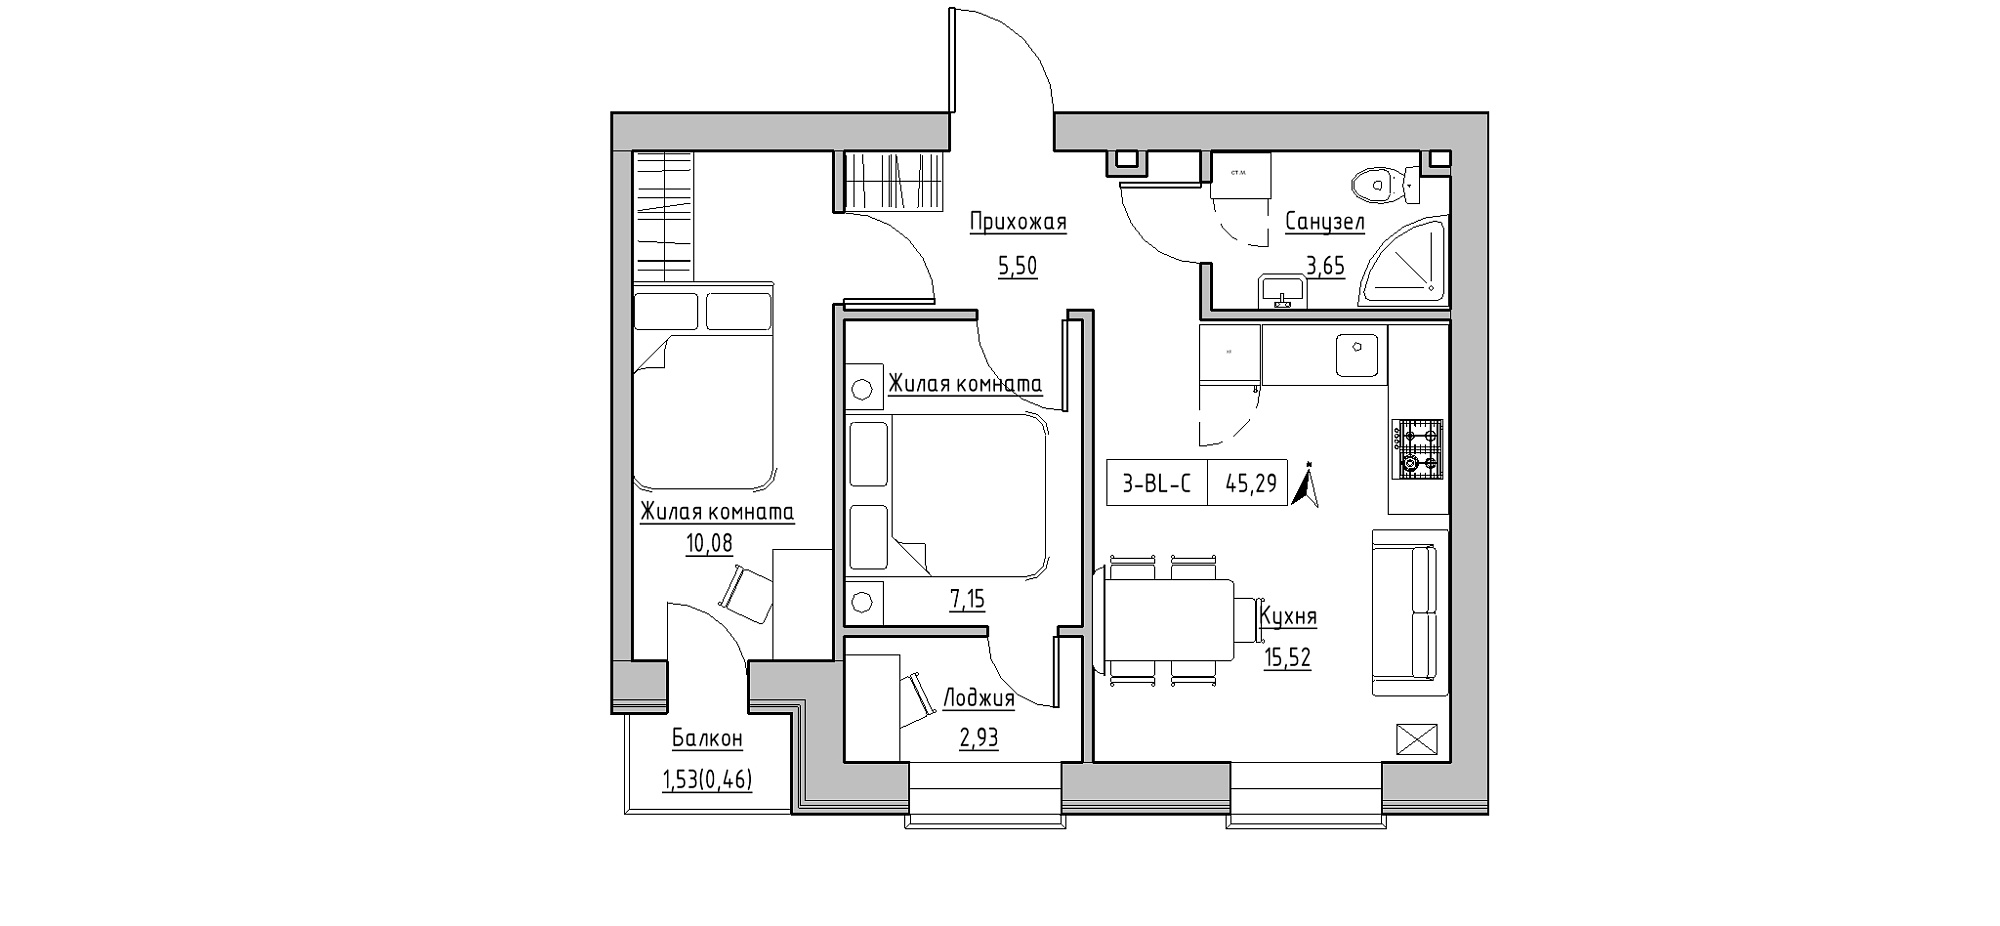 Planning 2-rm flats area 45.29m2, KS-020-03/0008.